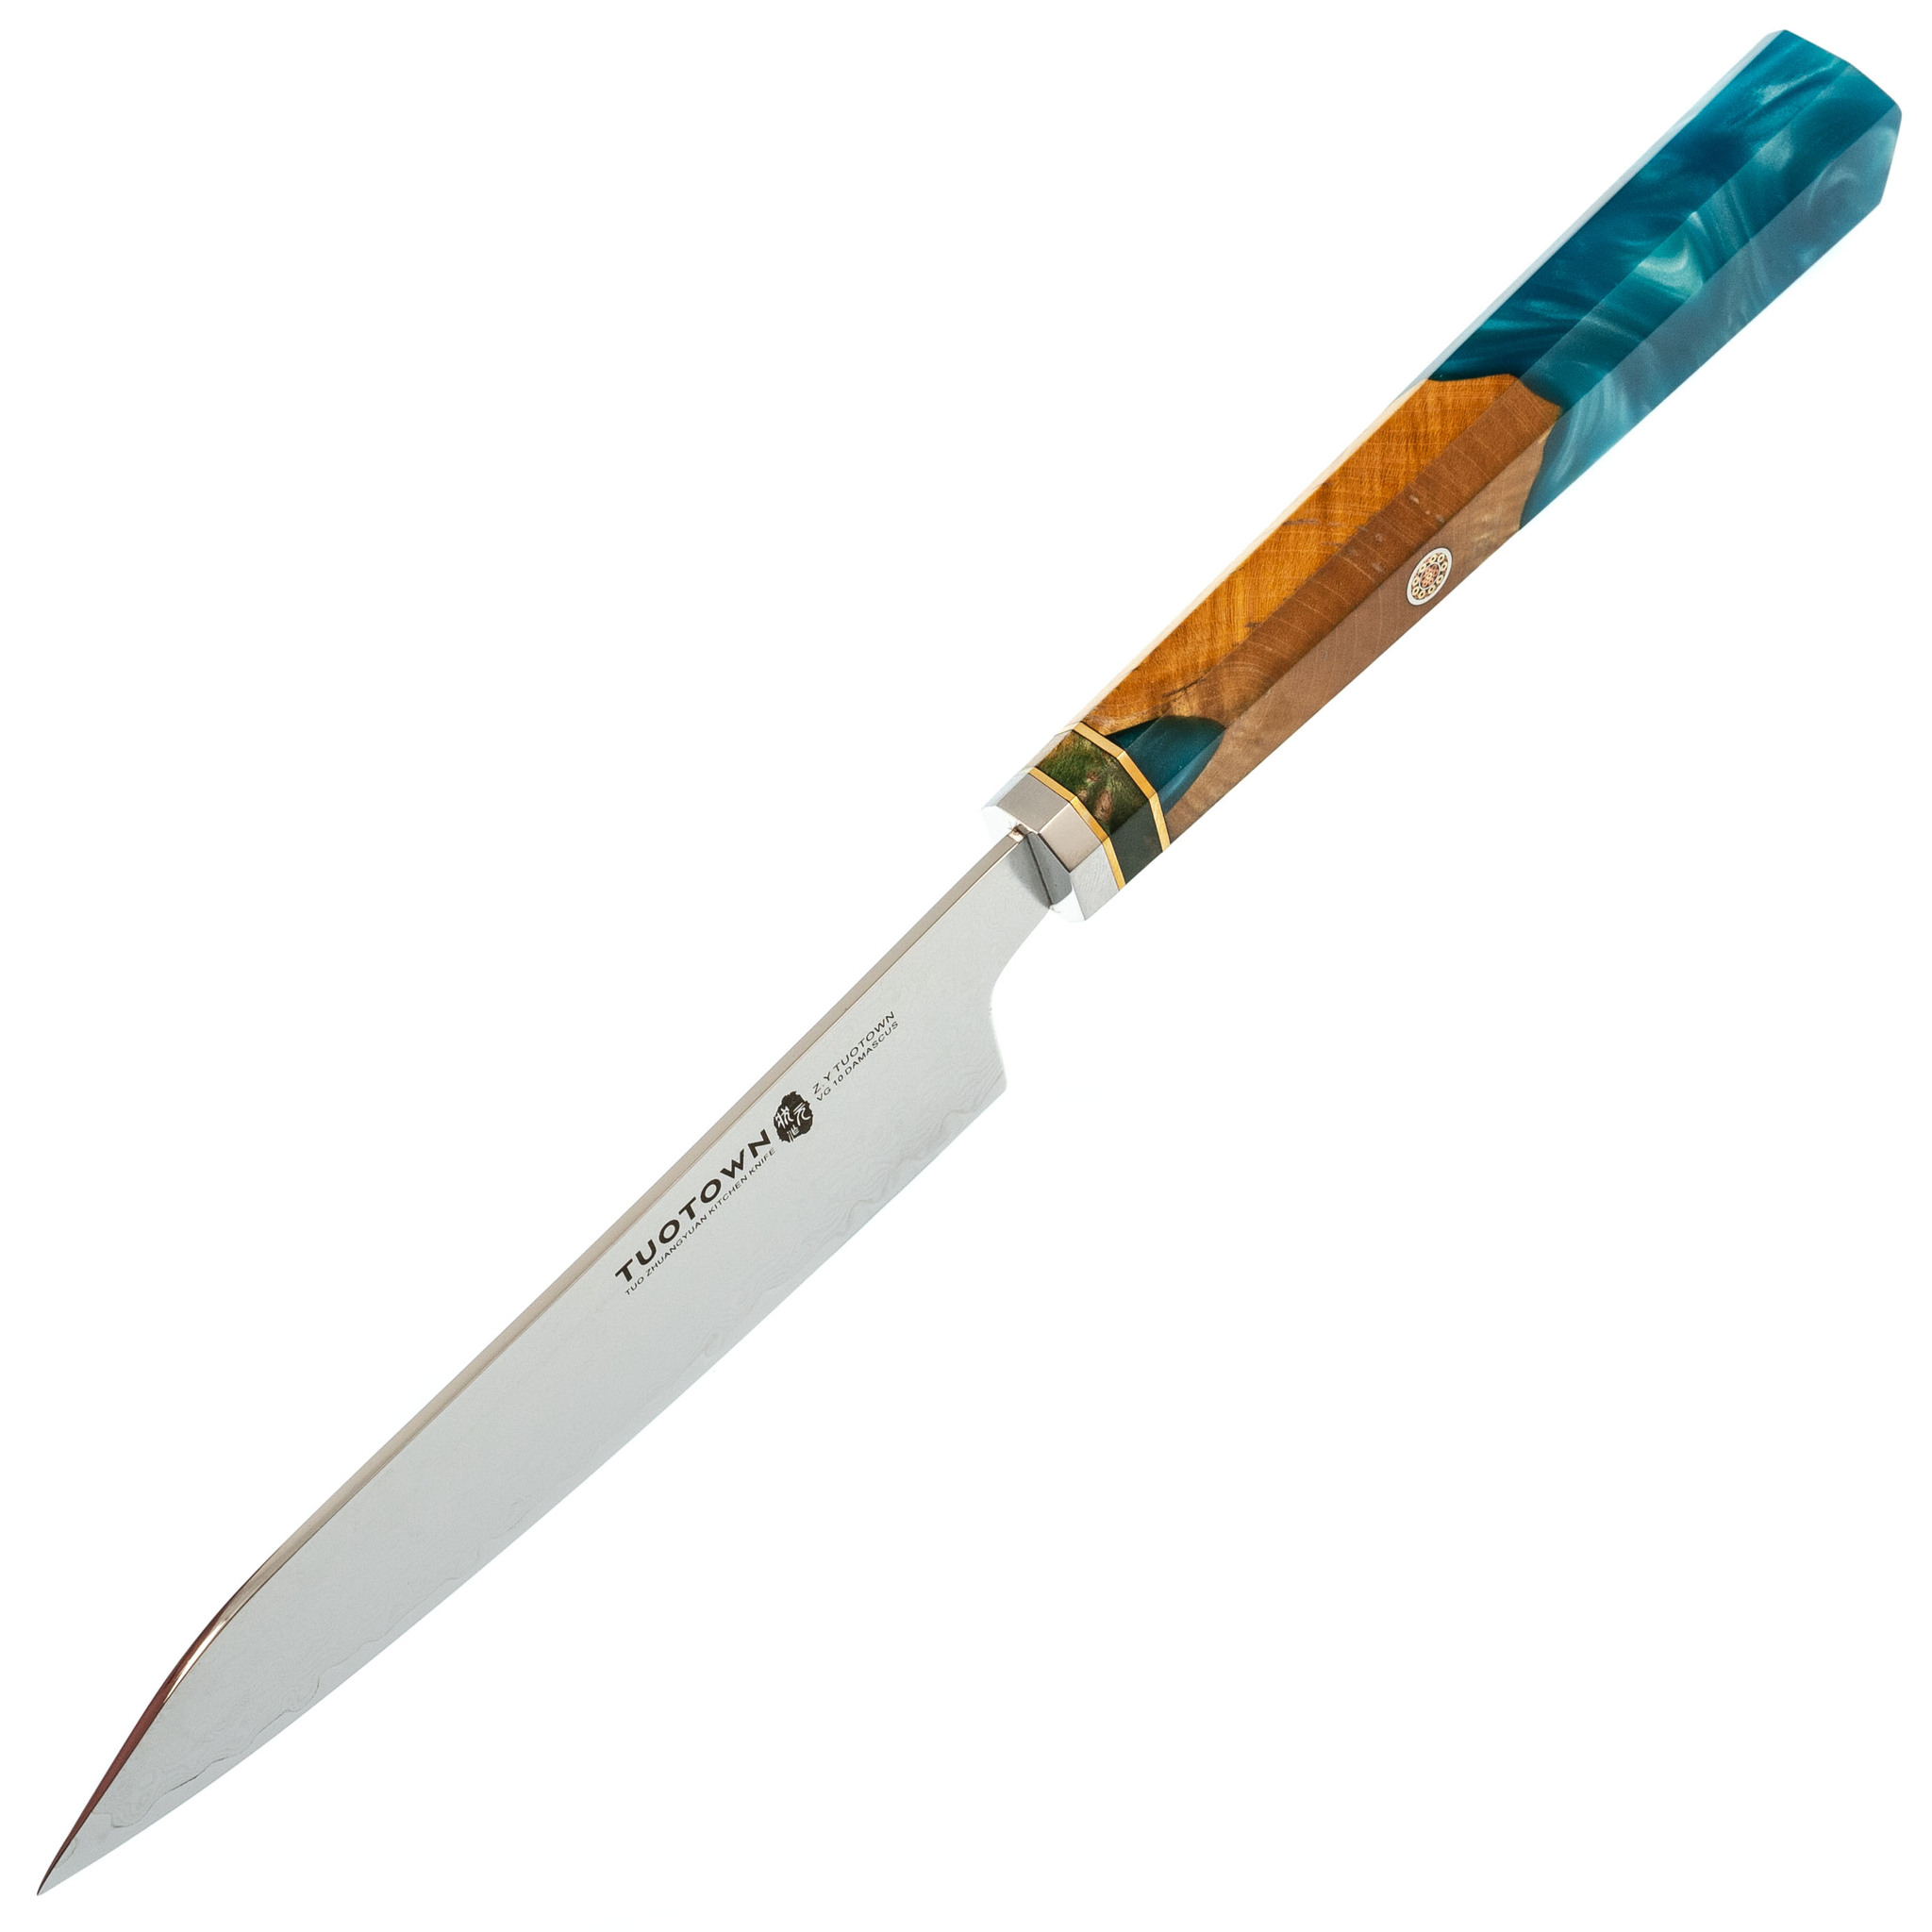 Кухонный нож Tuotown, сталь VG10, рукоять дерево/эпоксидка - фото 2